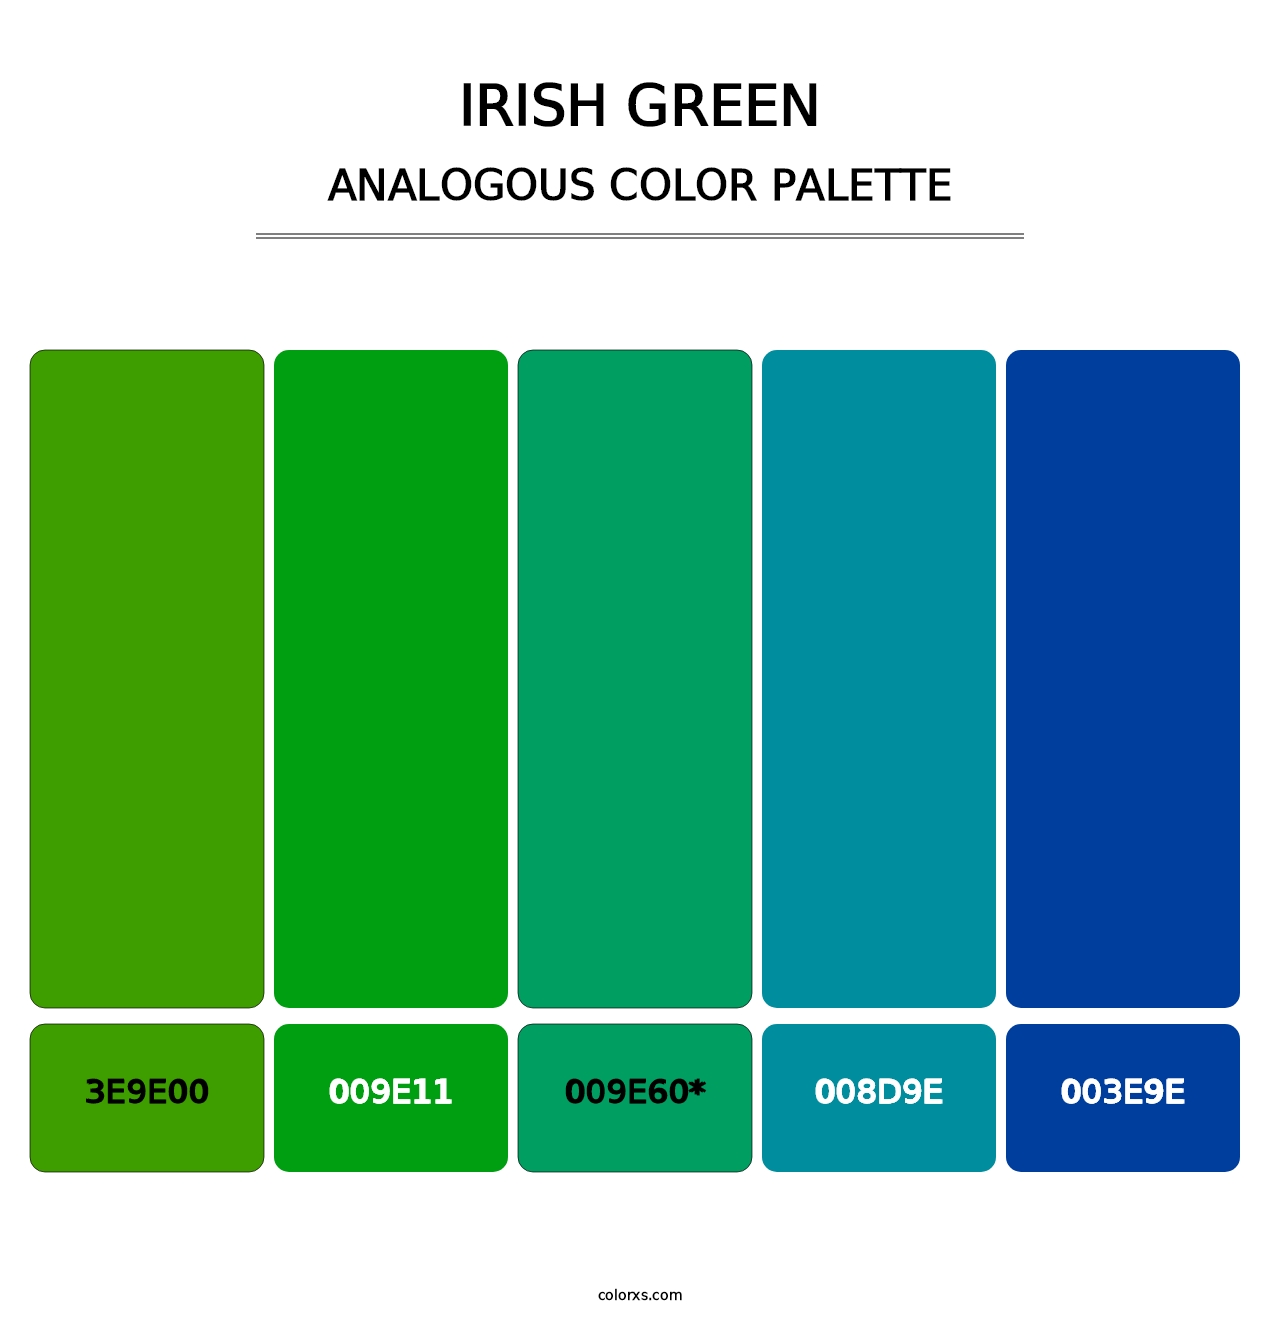 Irish Green - Analogous Color Palette